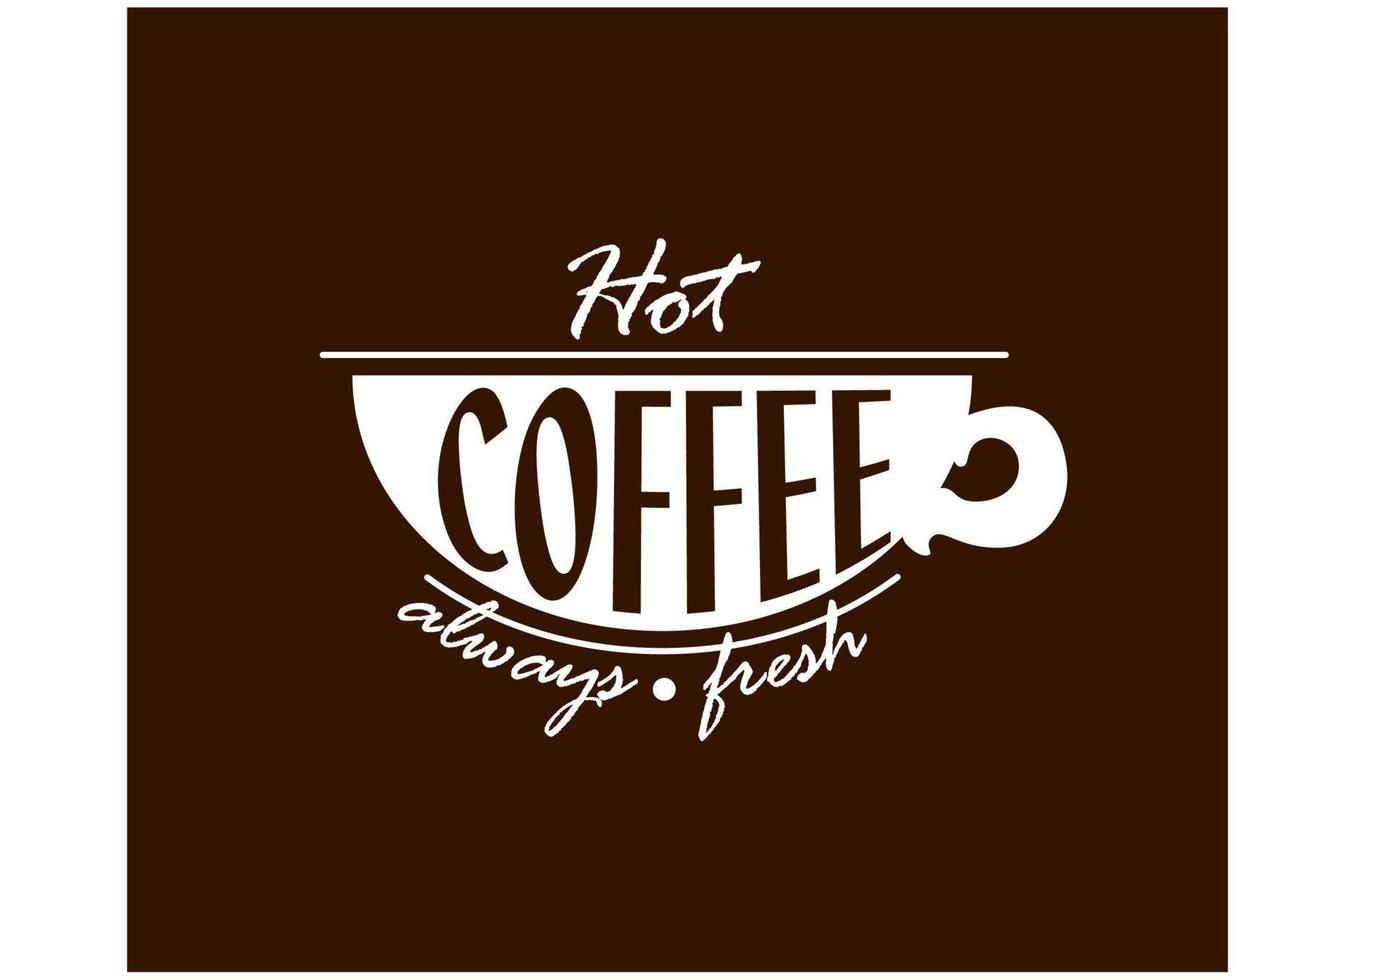 Hot coffee banner vector